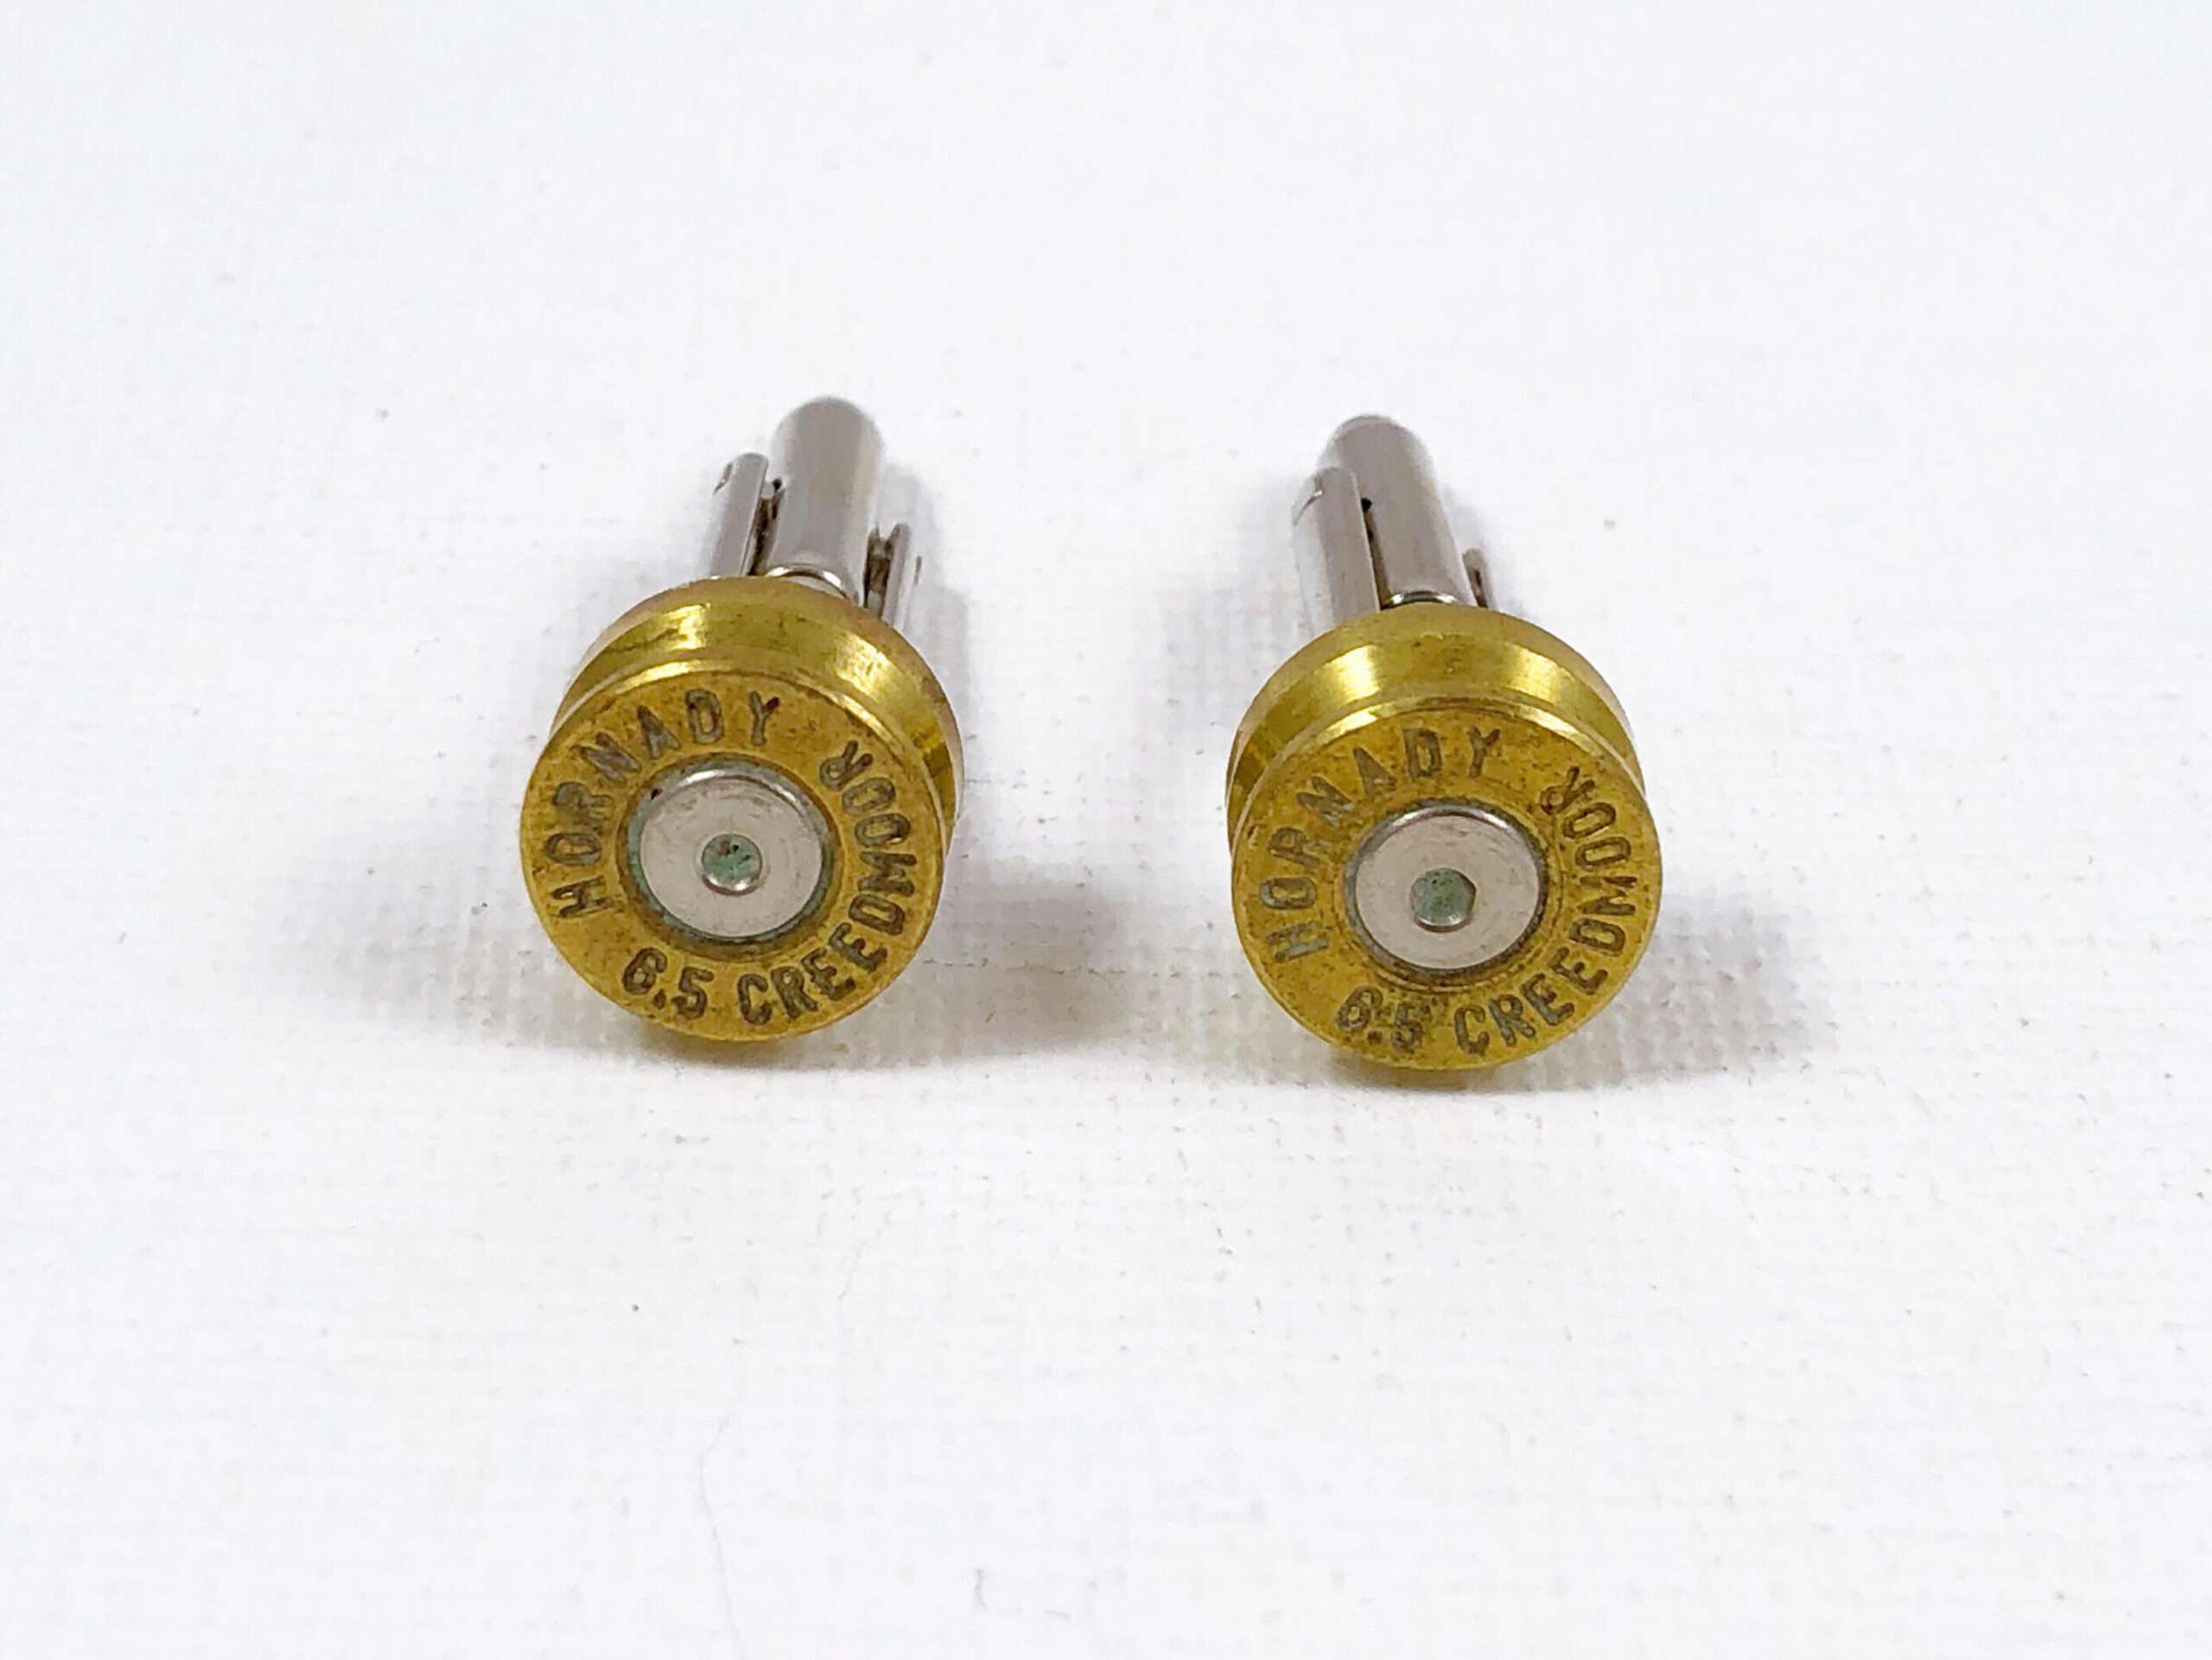 Men's Bullet Casing Tie Tack – Ammo Wear